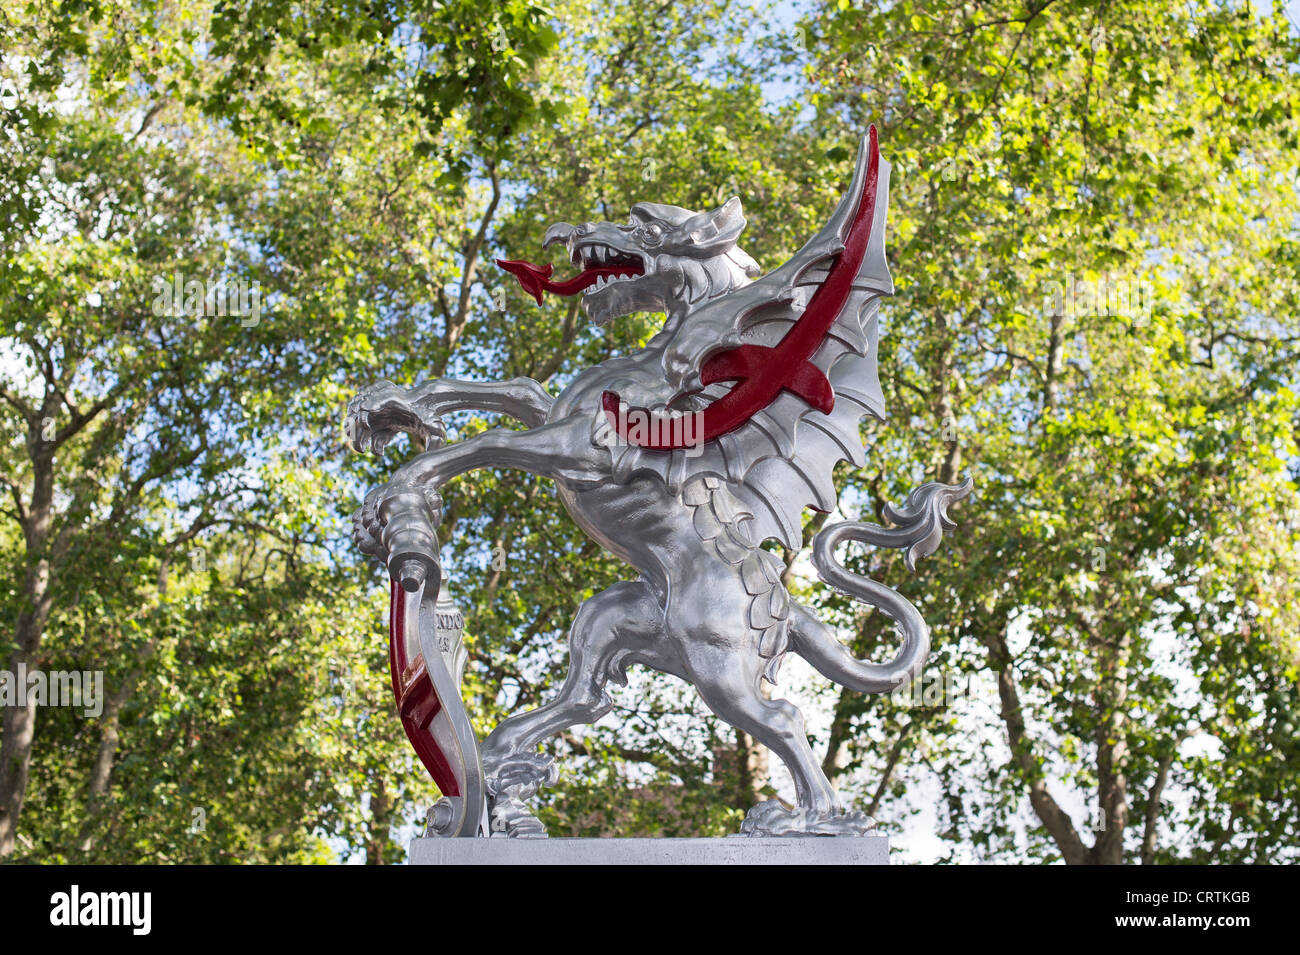 Silver Dragon sculpture, Victoria Embankment, London, England Stock Photo